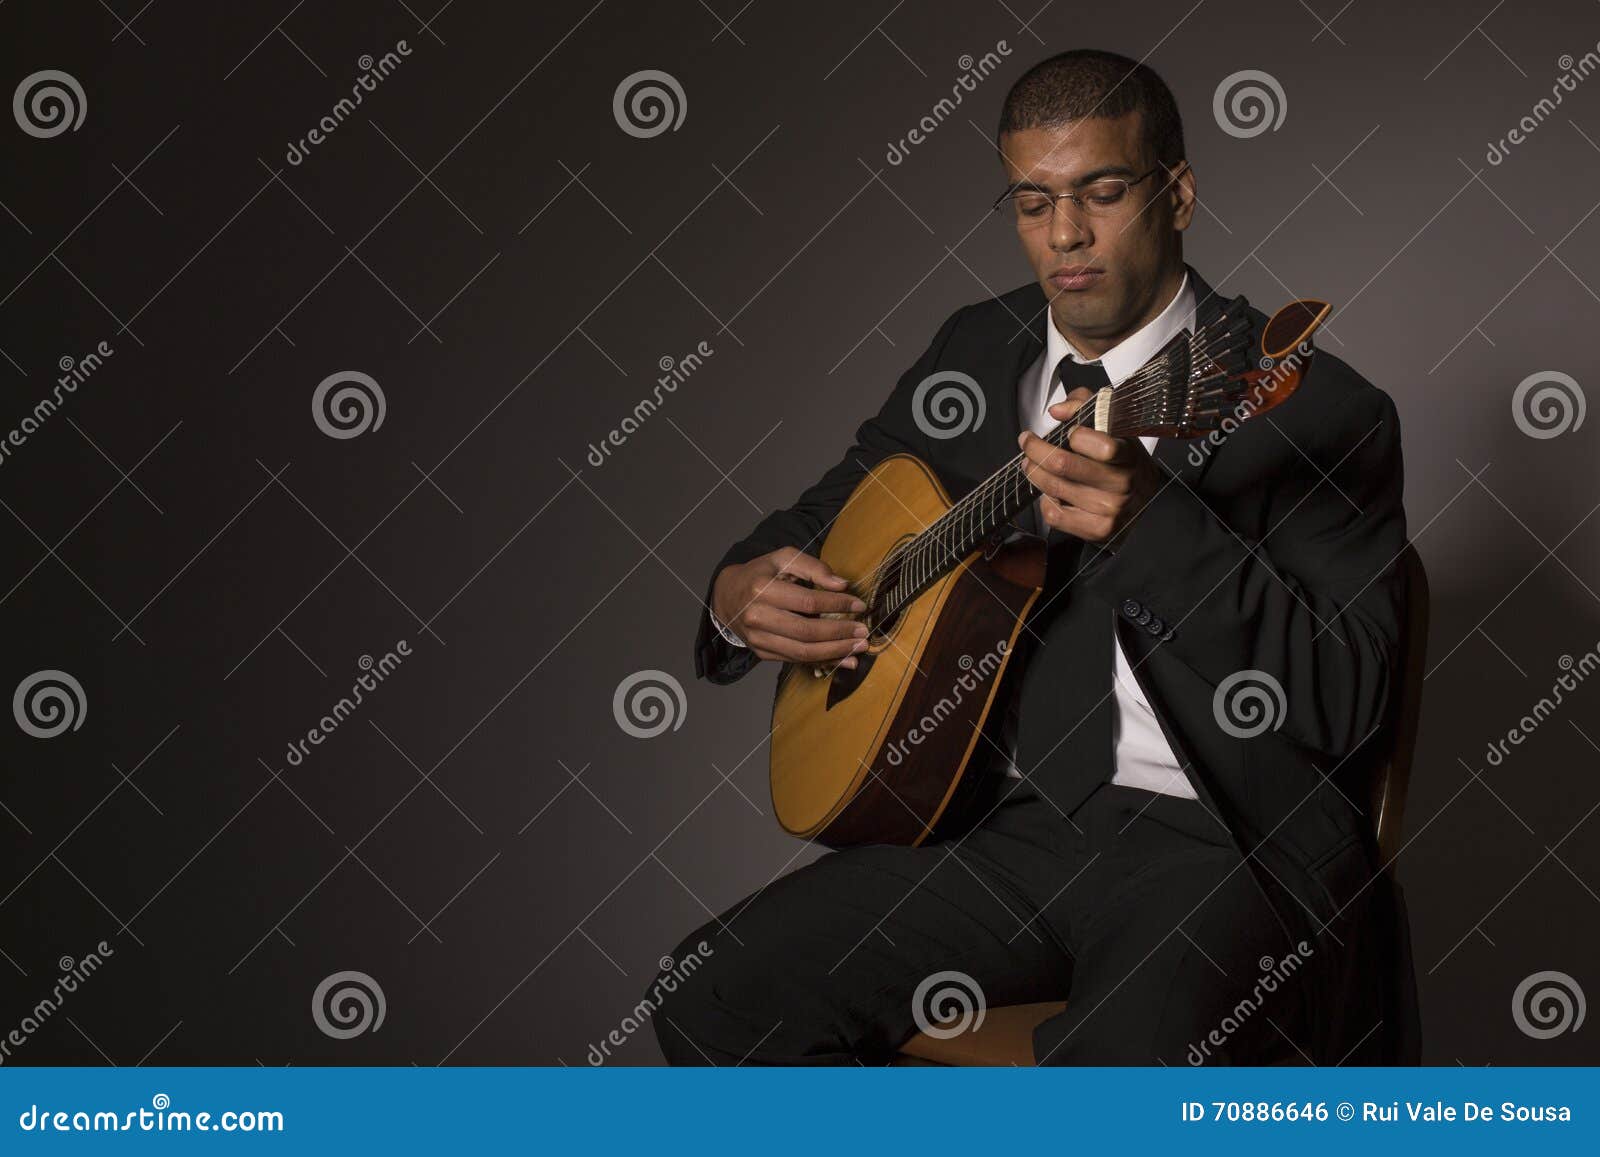 fado musician